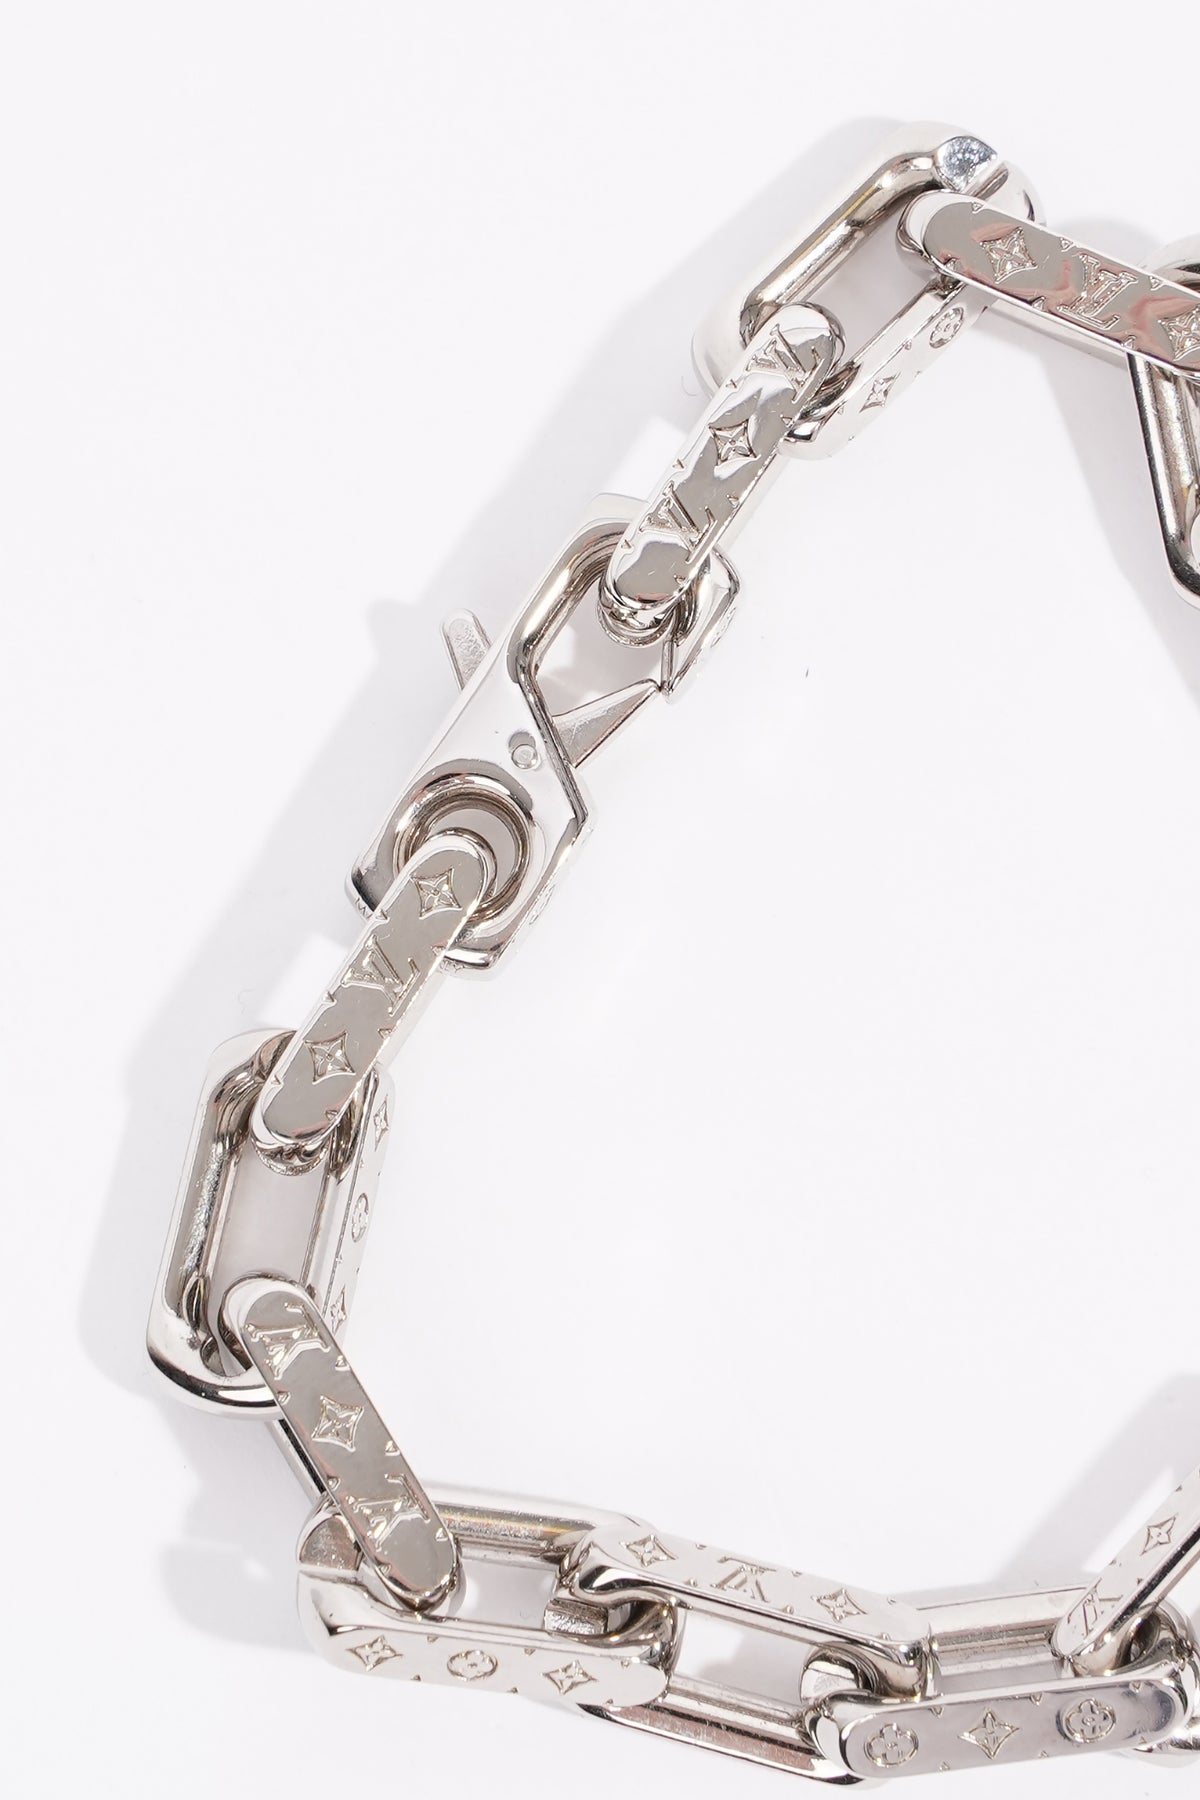 Louis Vuitton Monogram Chain Bracelet The @louisvuitton Monogram